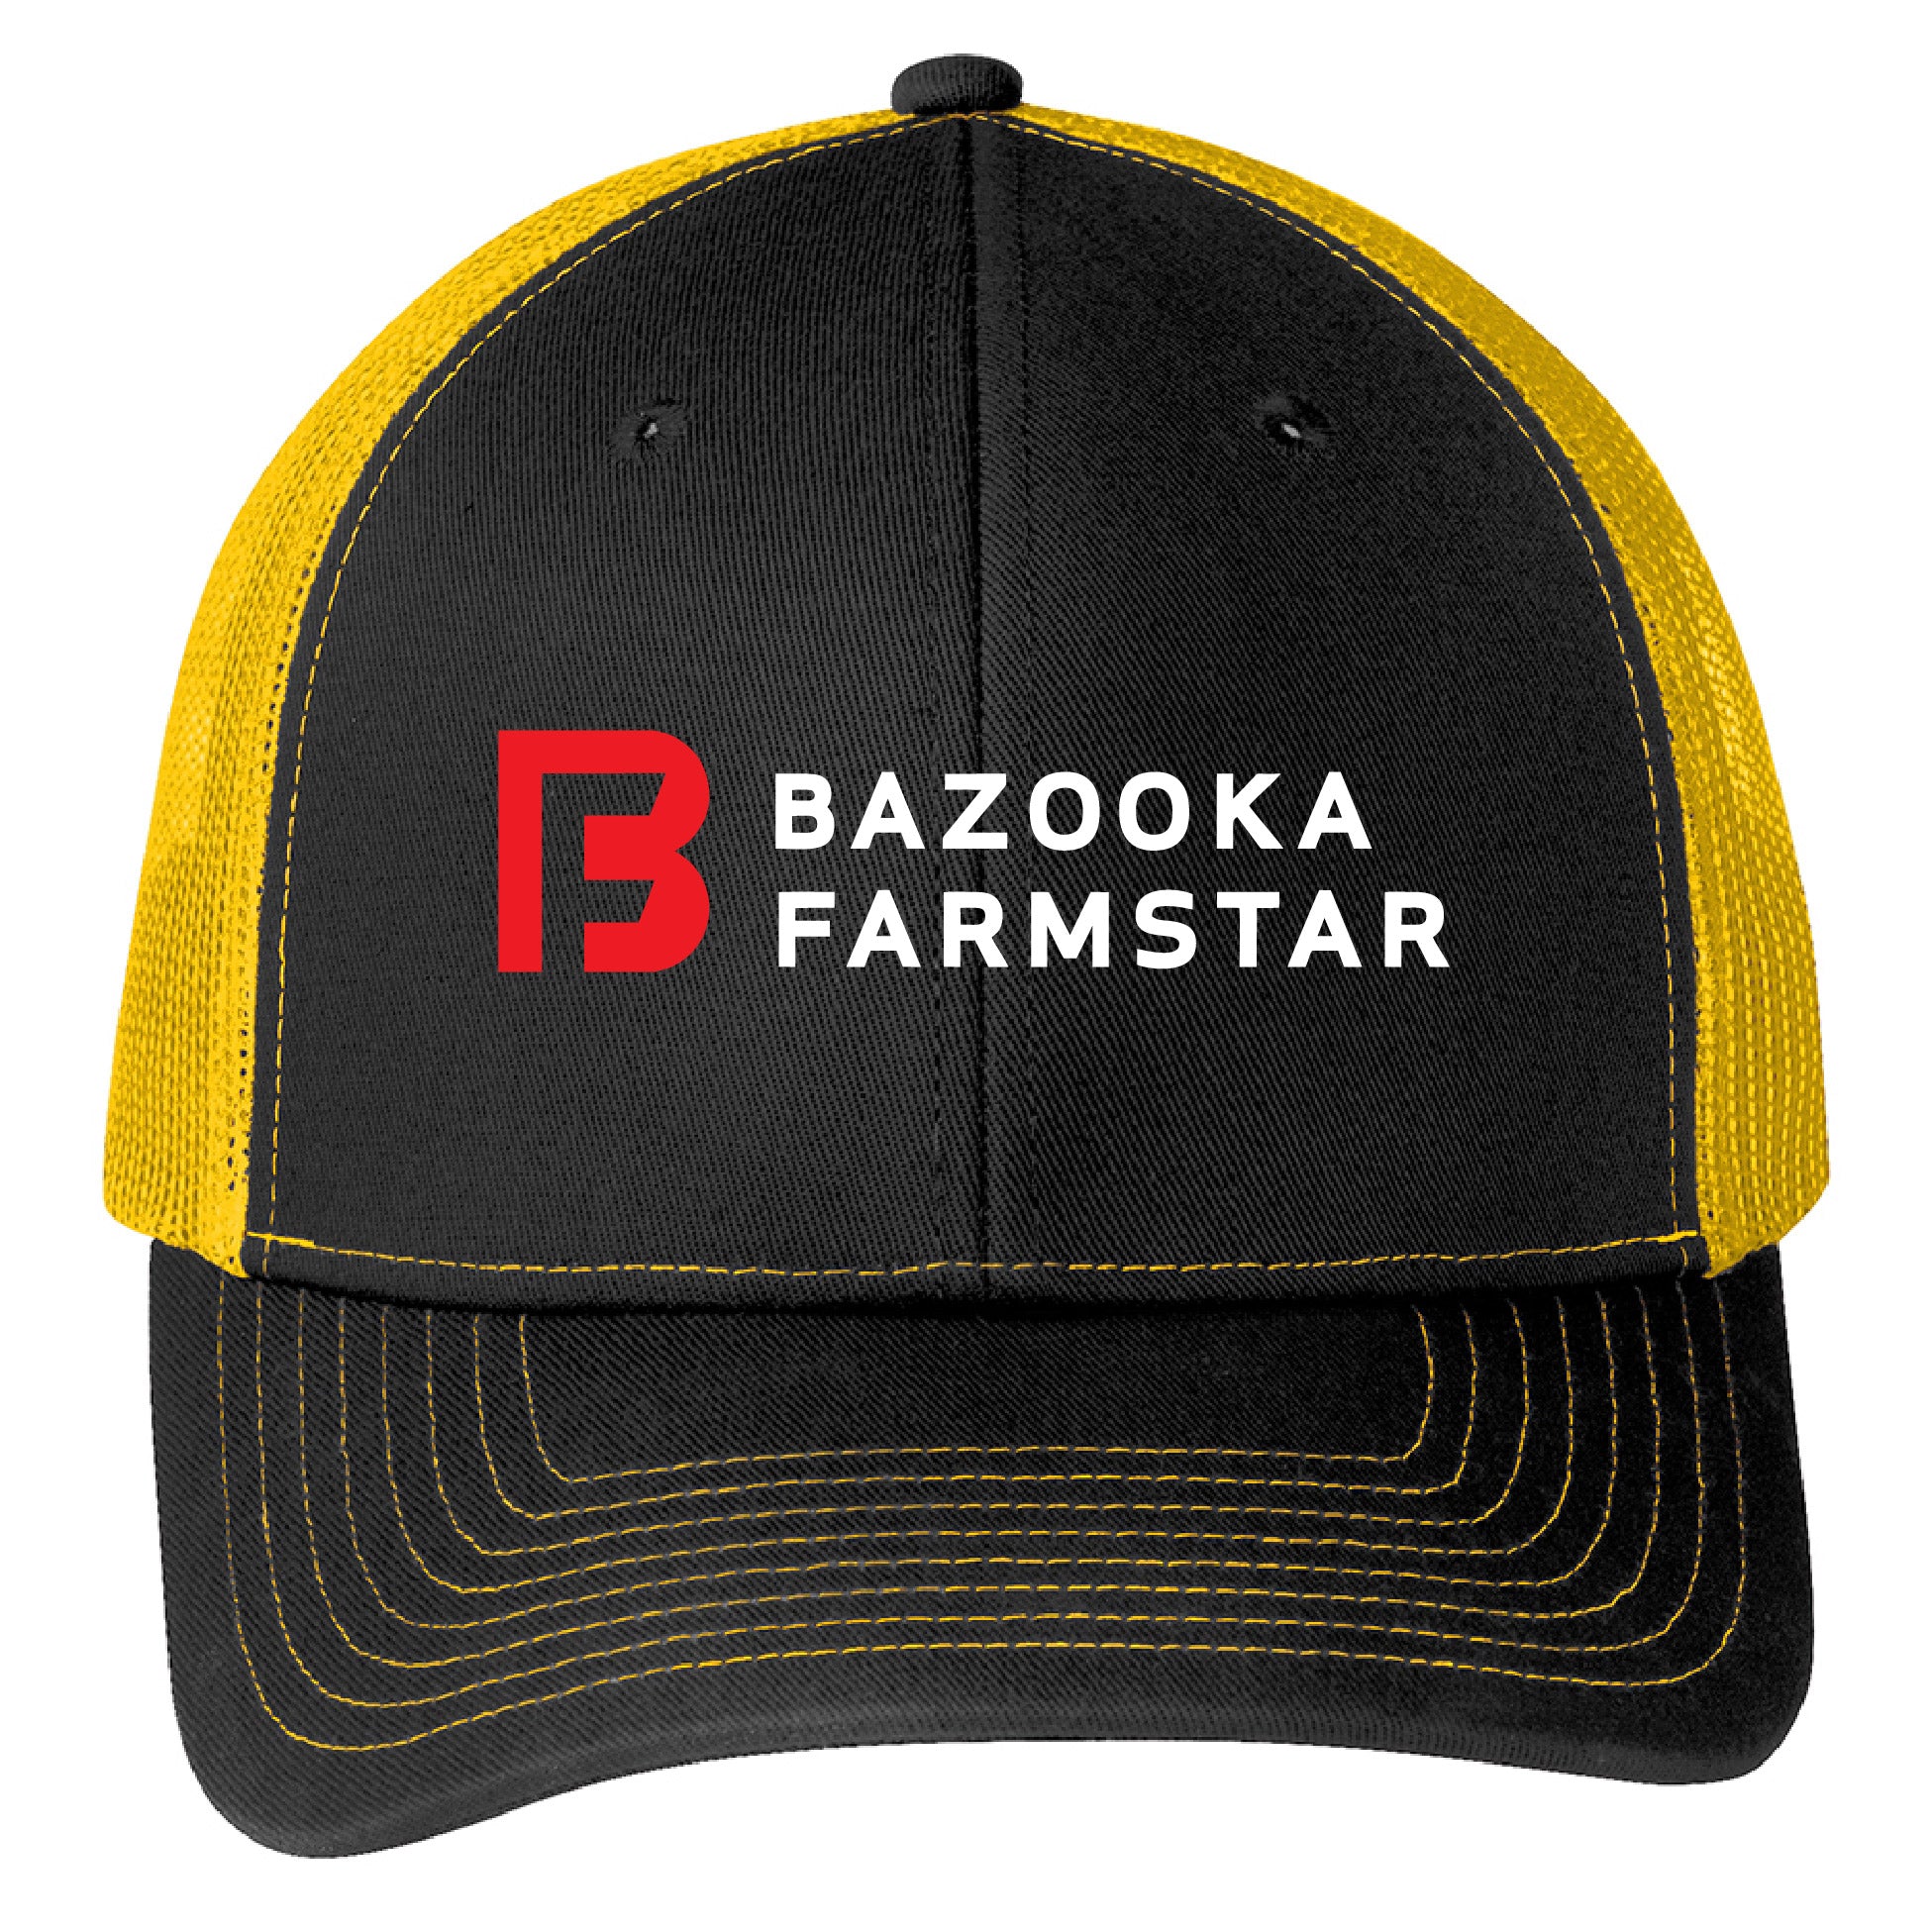 Bazooka Farmstar Snapback Trucker Cap